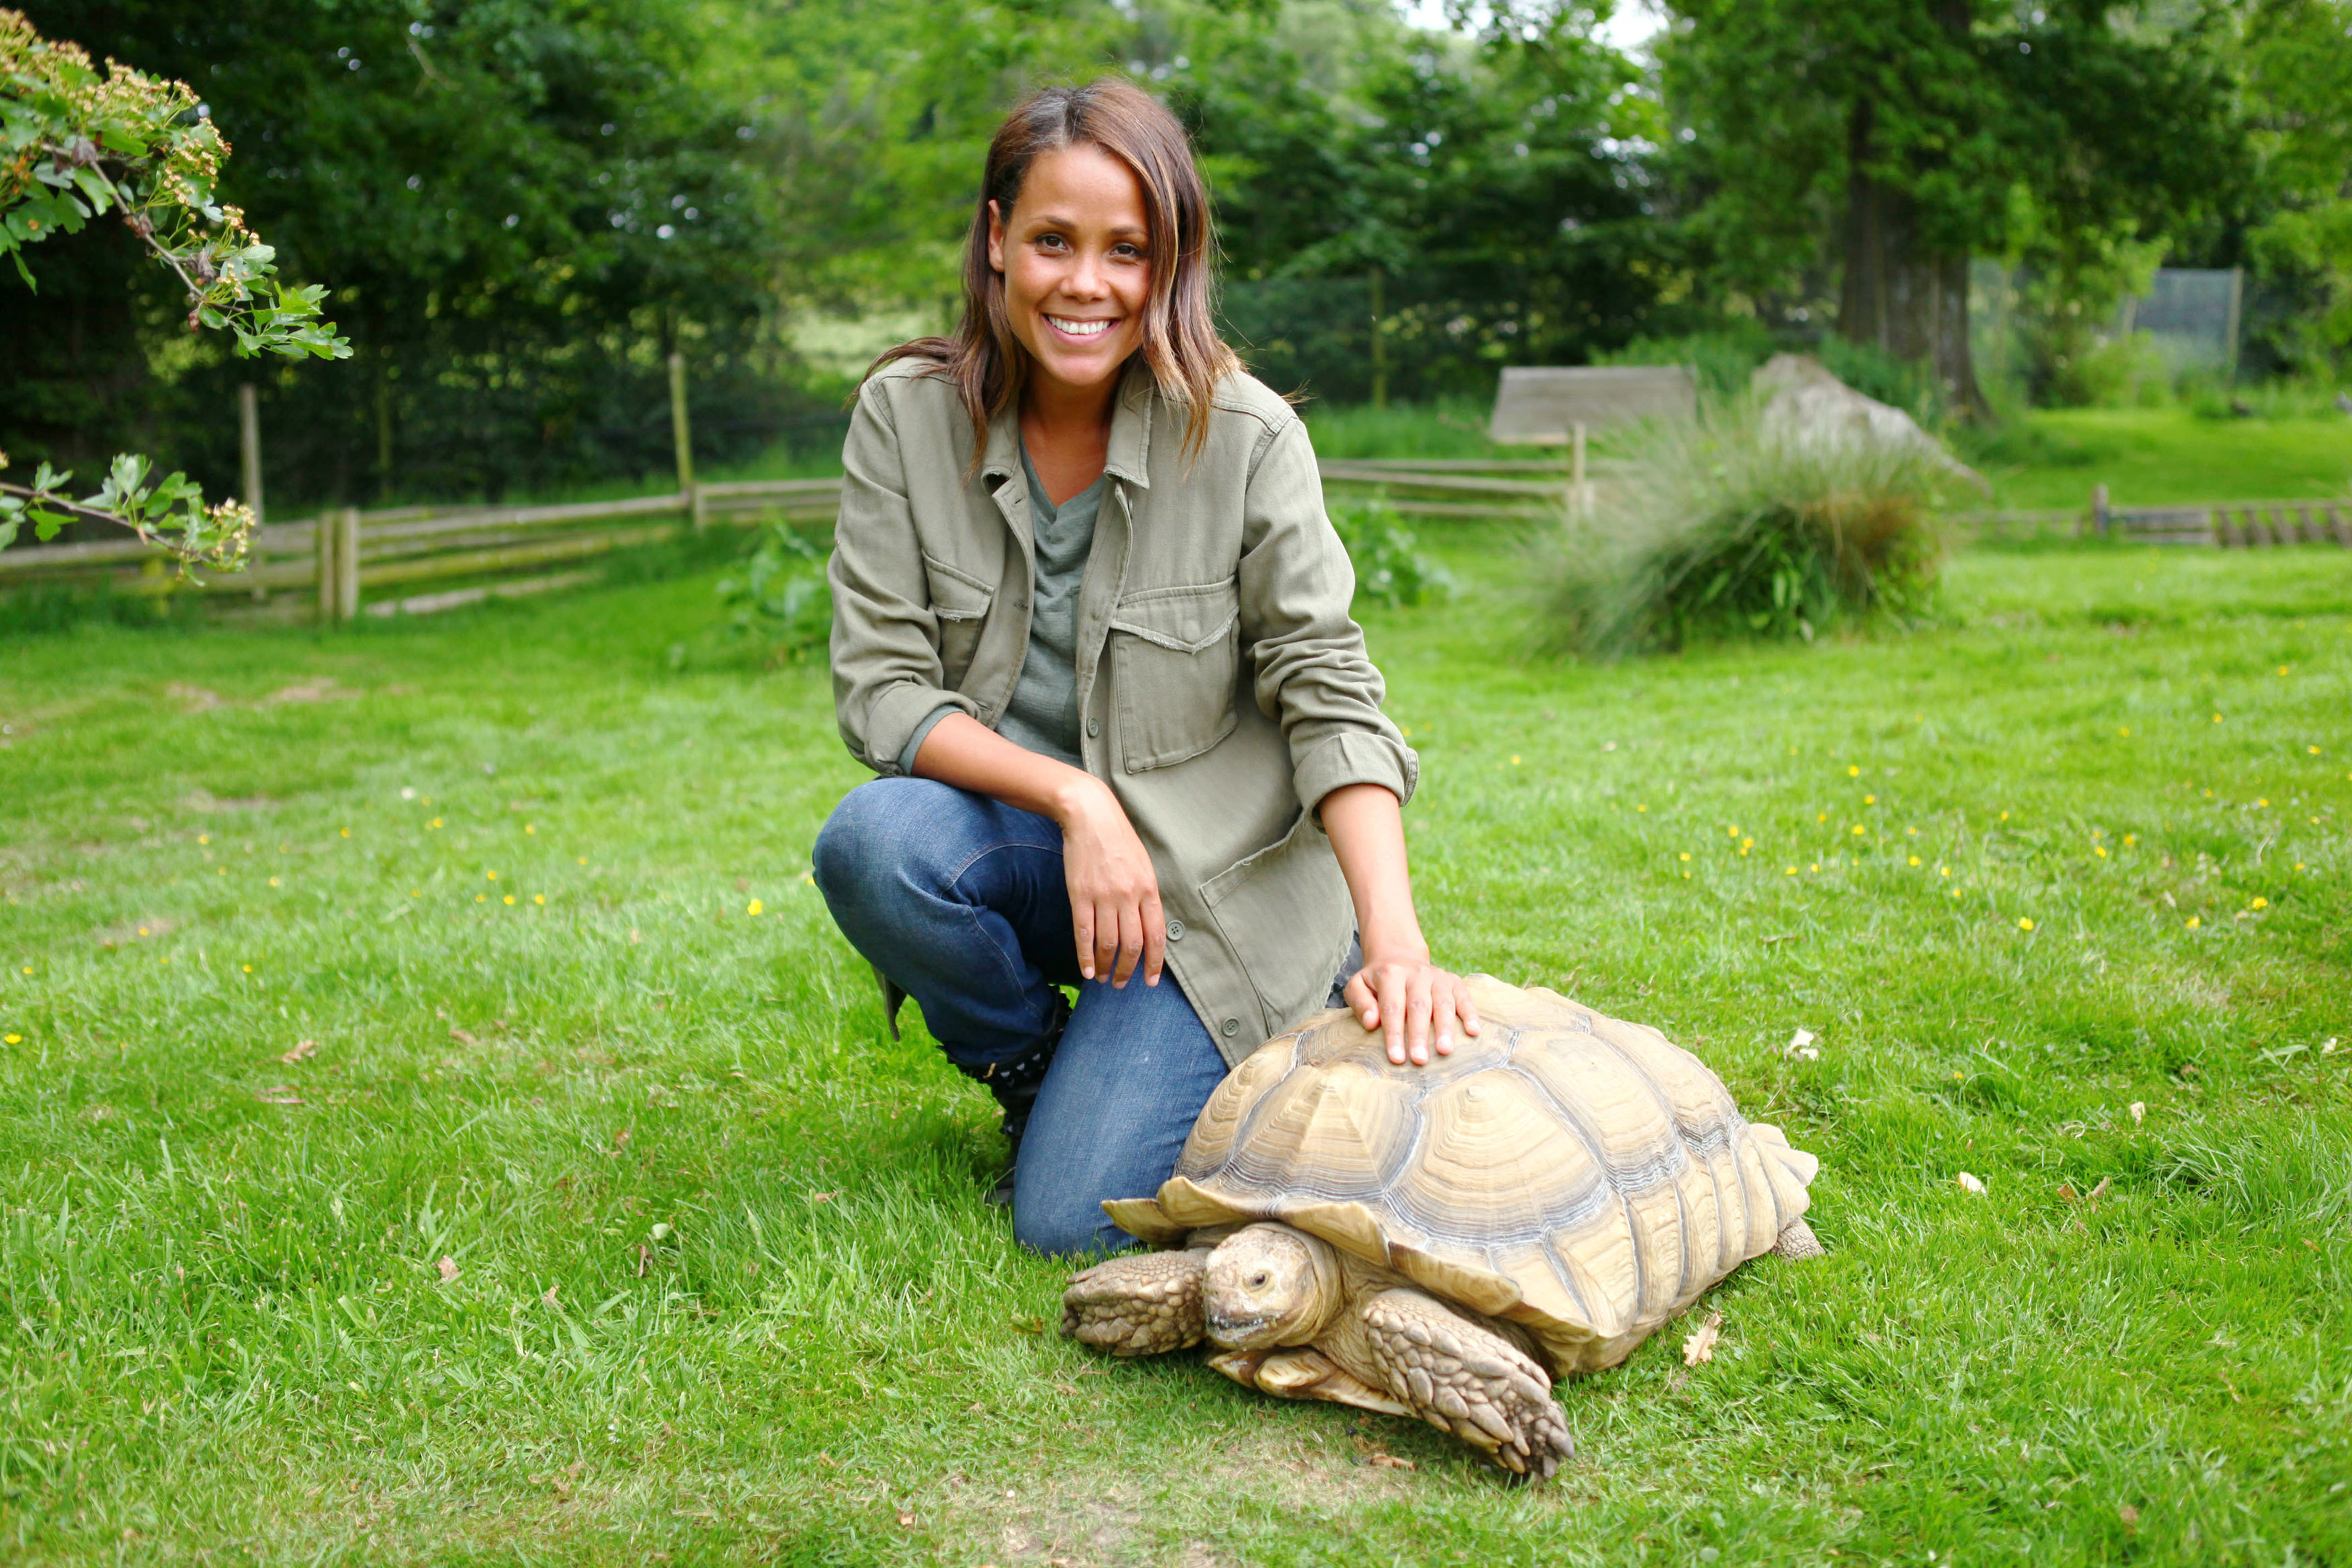 Grumpy tortoise gave Jean Johansson the runaround on Animal Park TV show -  The Sunday Post